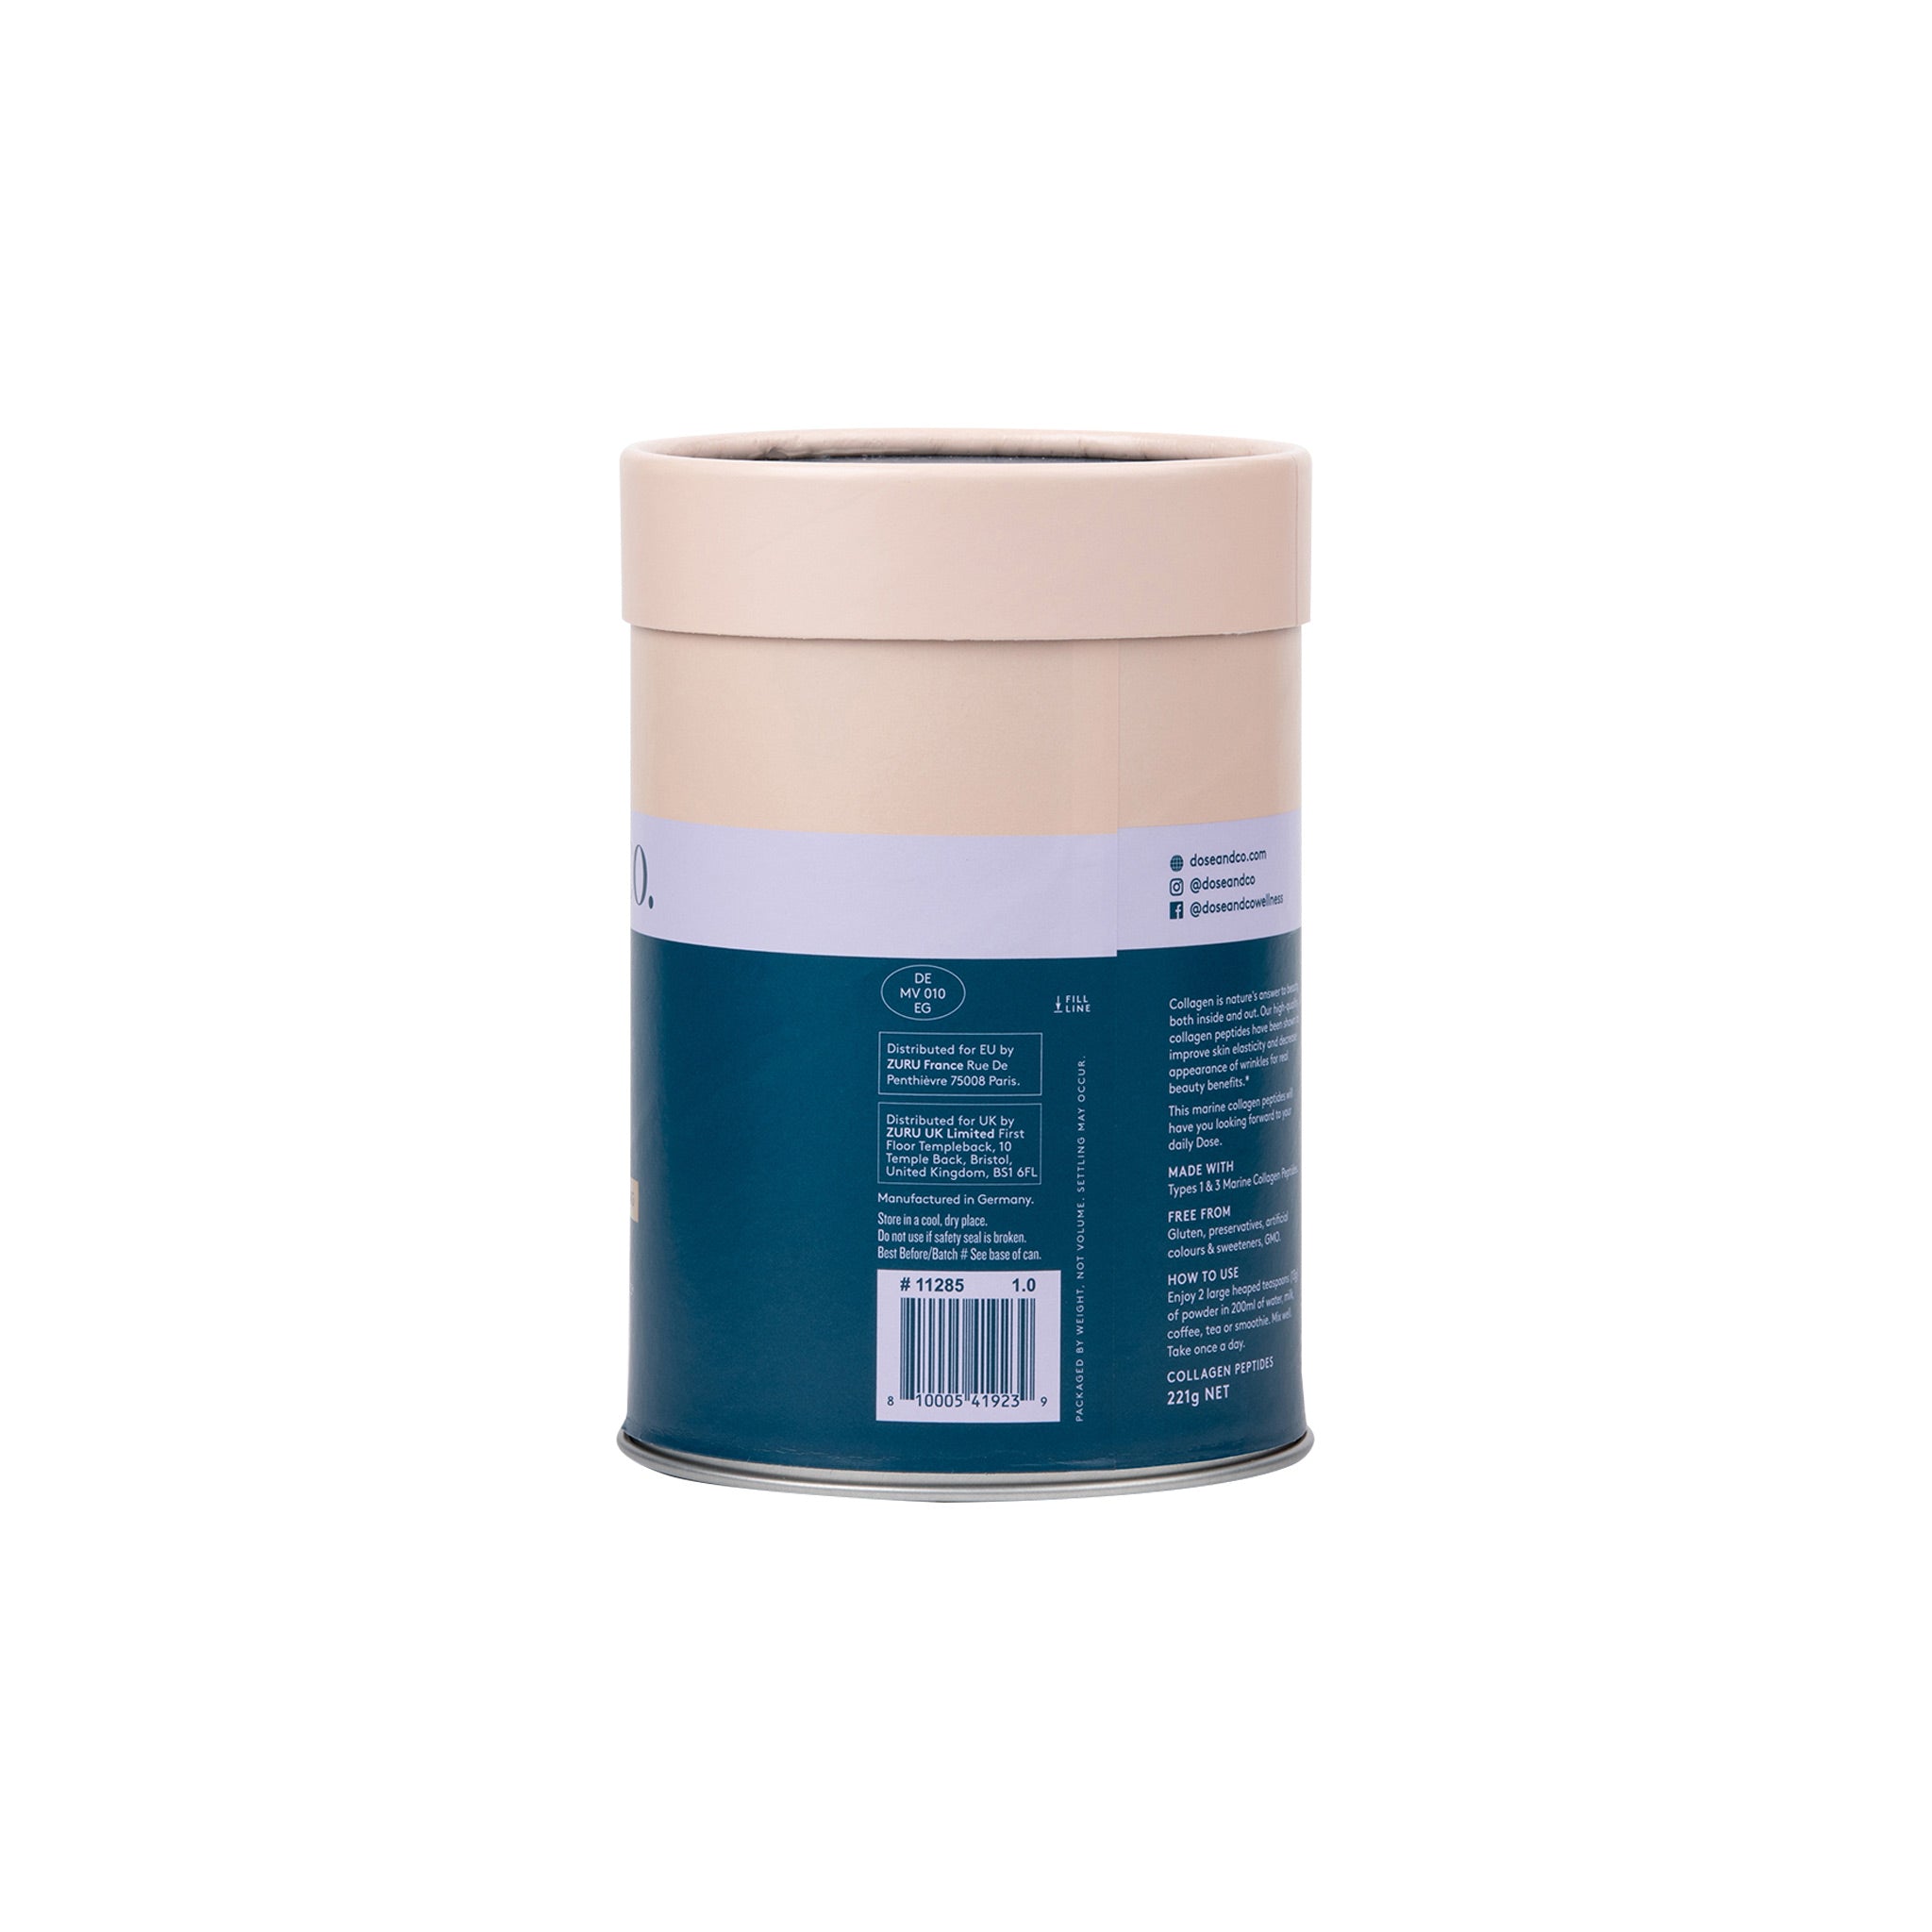 Dose & Co Pure Marine Collagen Peptides 221g